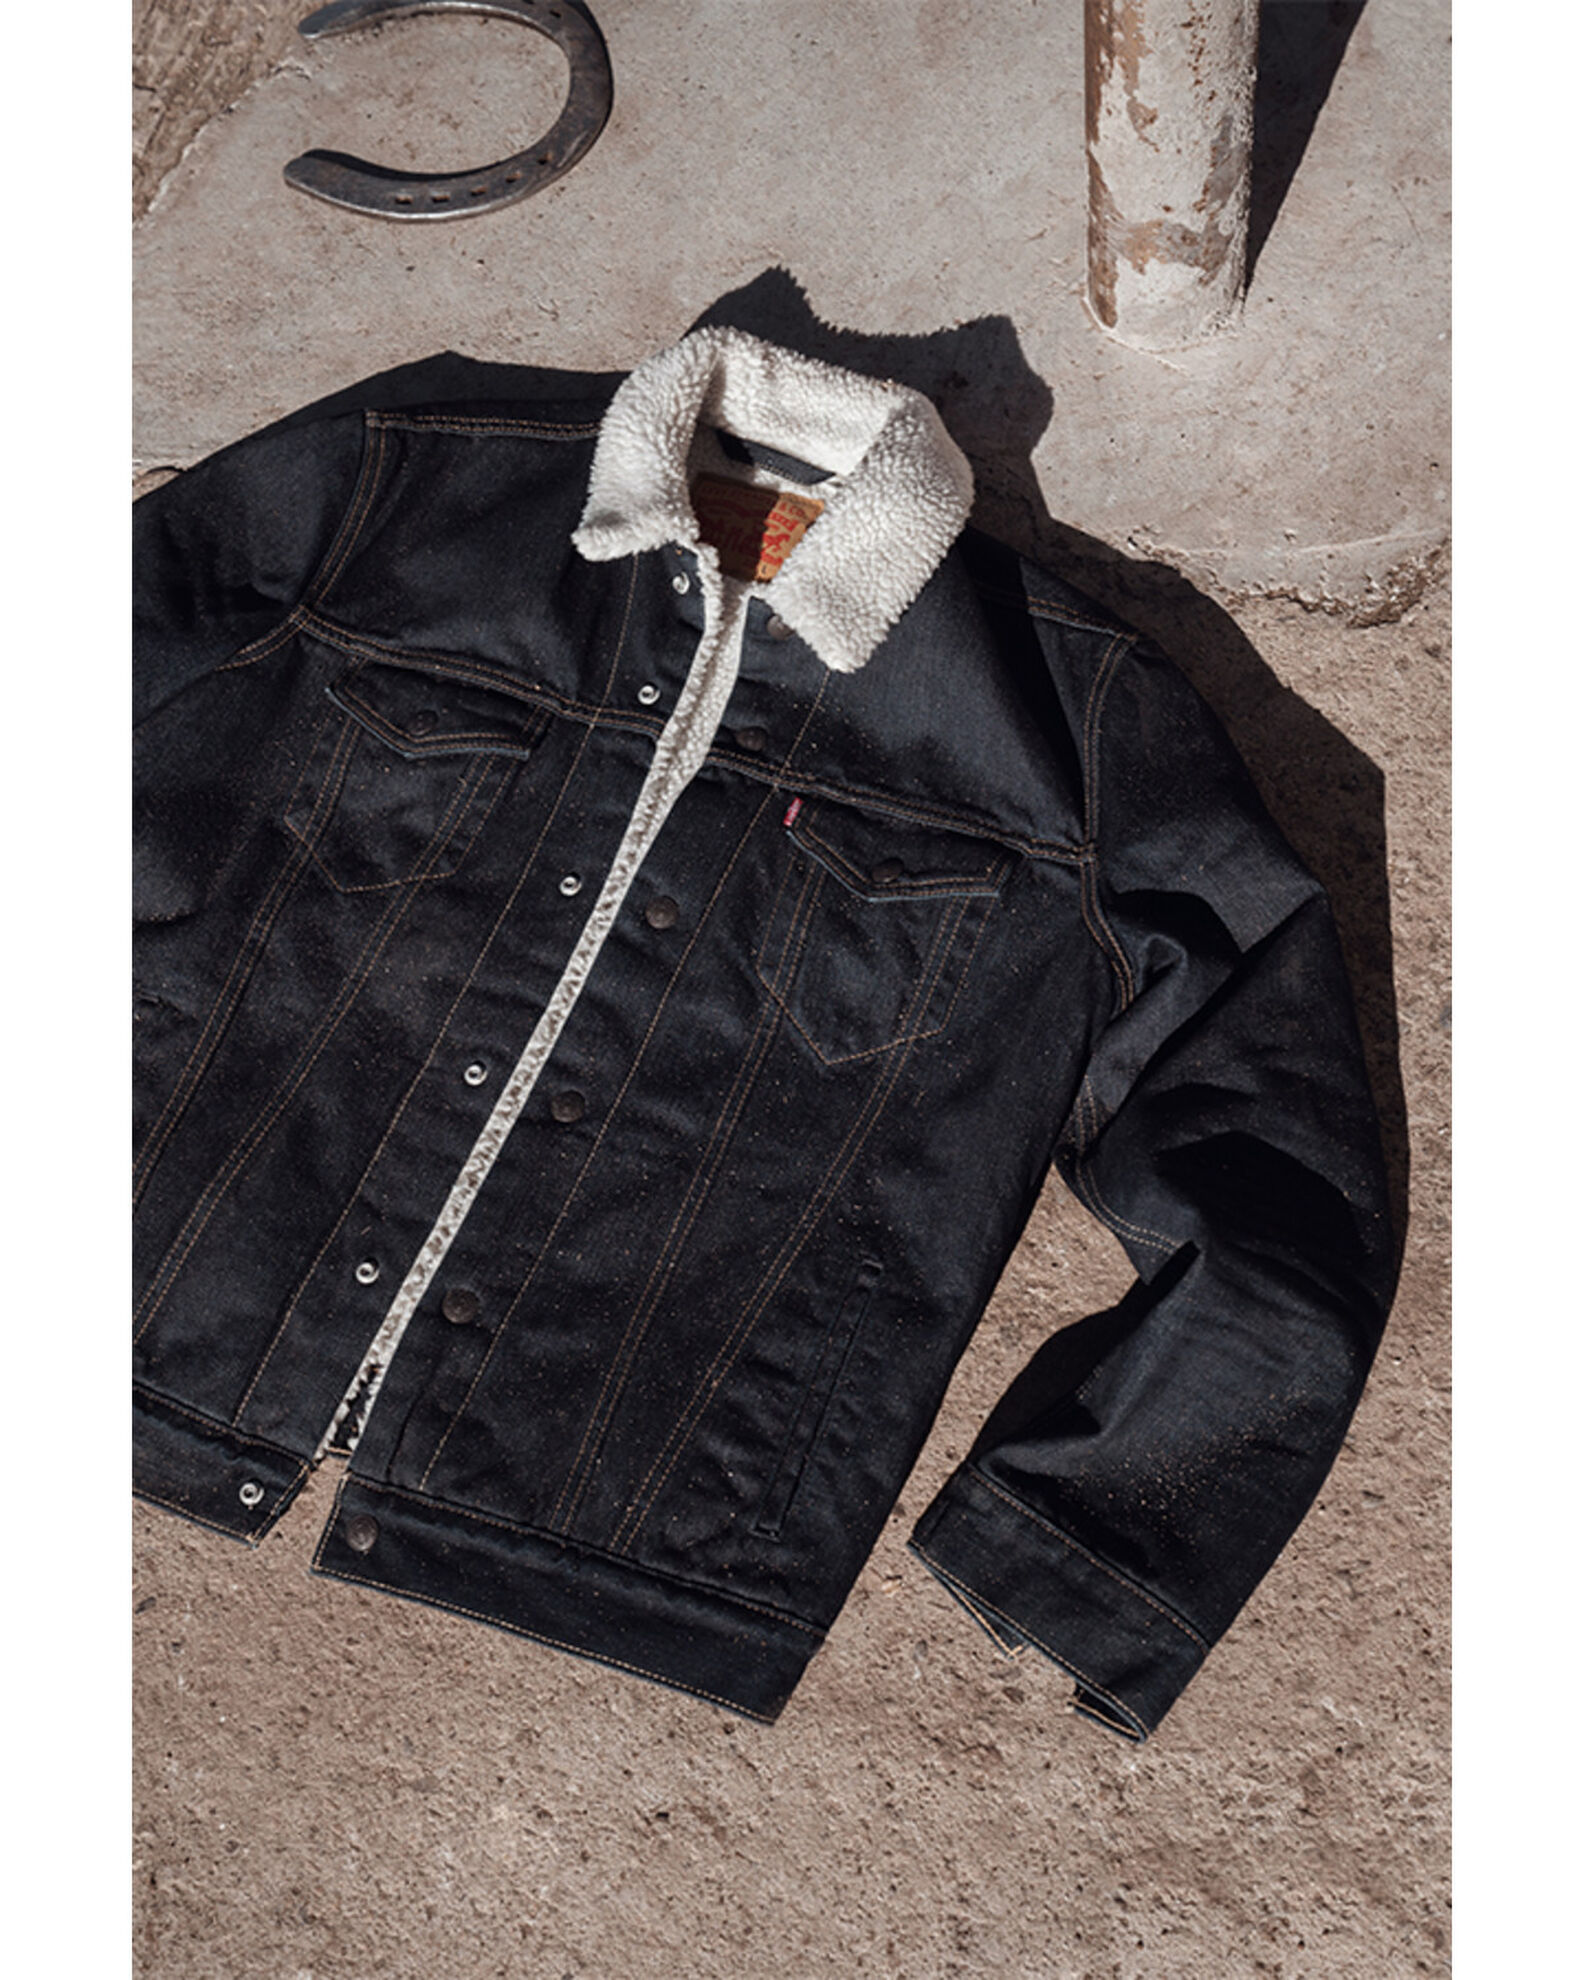 Product Name: Levi's Men's Juniper Sherpa Lined Trucker Denim Jacket